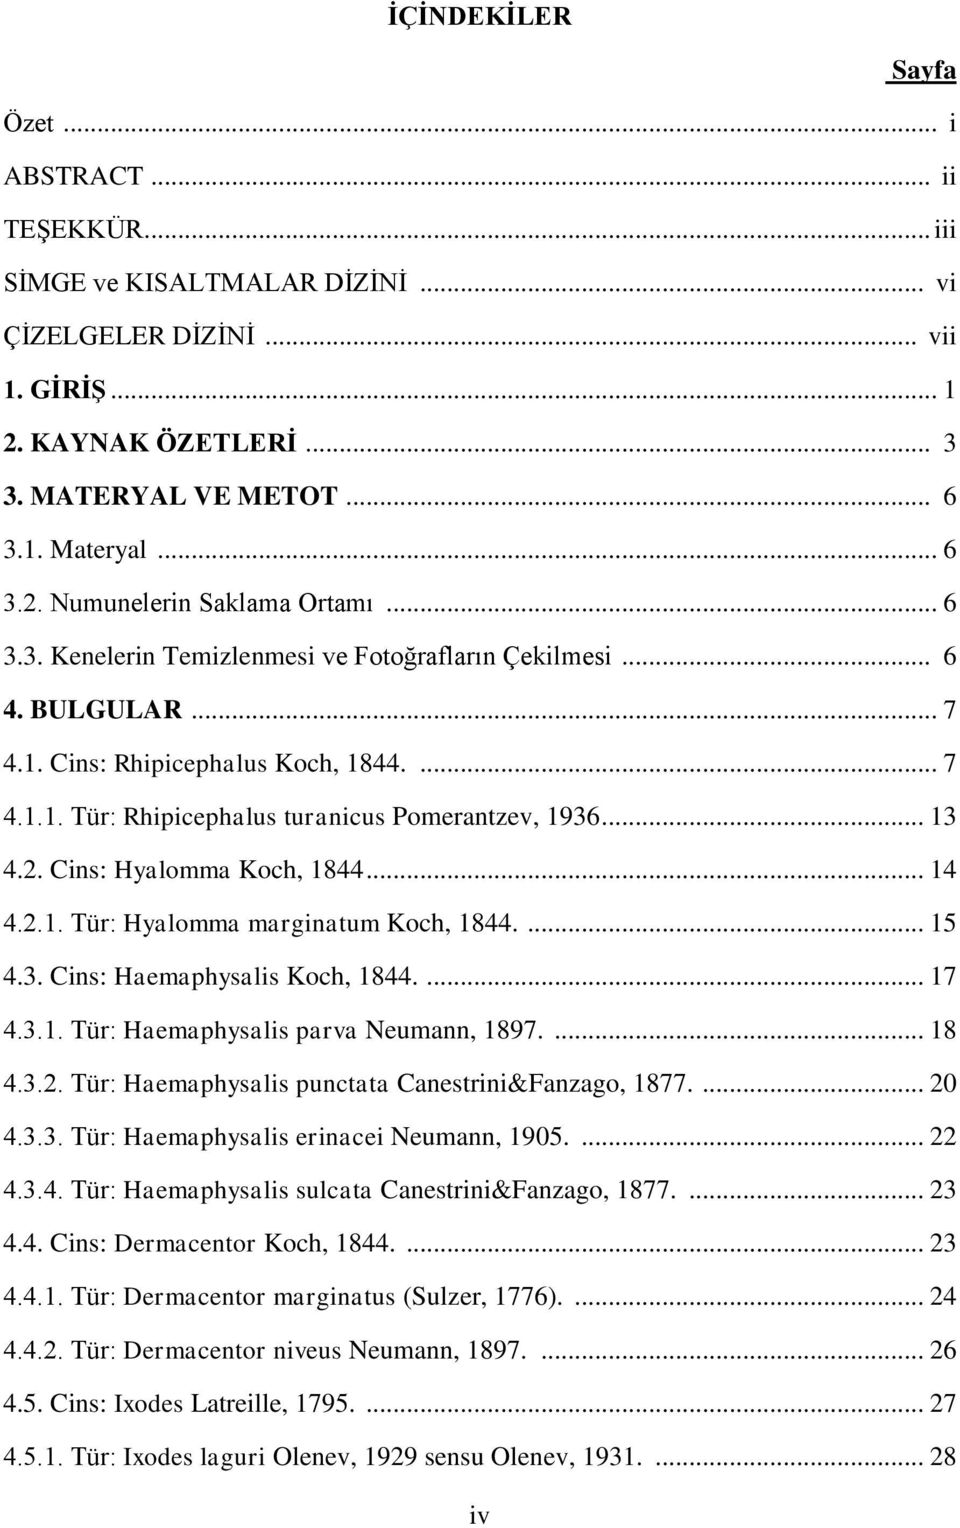 .. 13 4.2. Cins: Hyalomma Koch, 1844... 14 4.2.1. Tür: Hyalomma marginatum Koch, 1844.... 15 4.3. Cins: Haemaphysalis Koch, 1844.... 17 4.3.1. Tür: Haemaphysalis parva Neumann, 1897.... 18 4.3.2. Tür: Haemaphysalis punctata Canestrini&Fanzago, 1877.